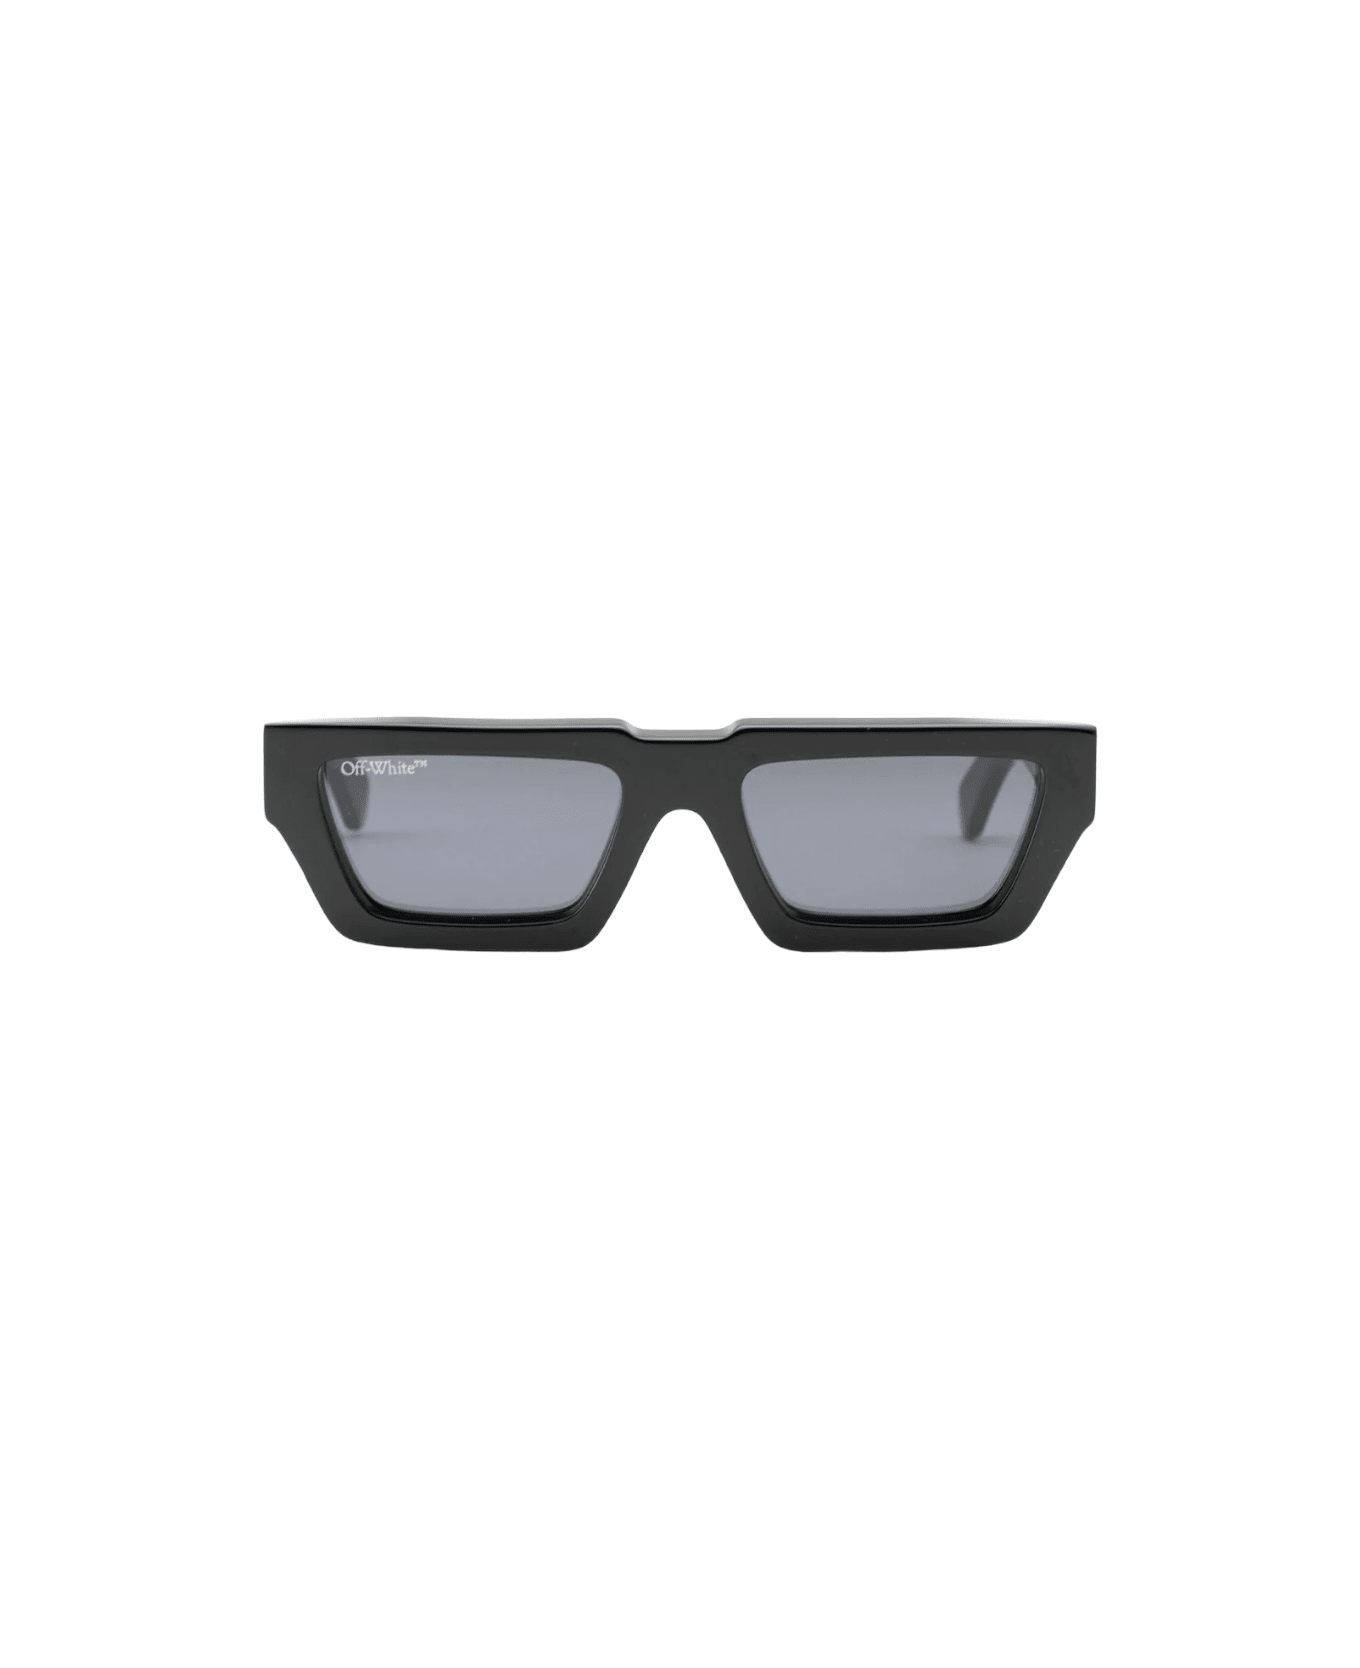 Off-White Manchester Sunglasses サングラス